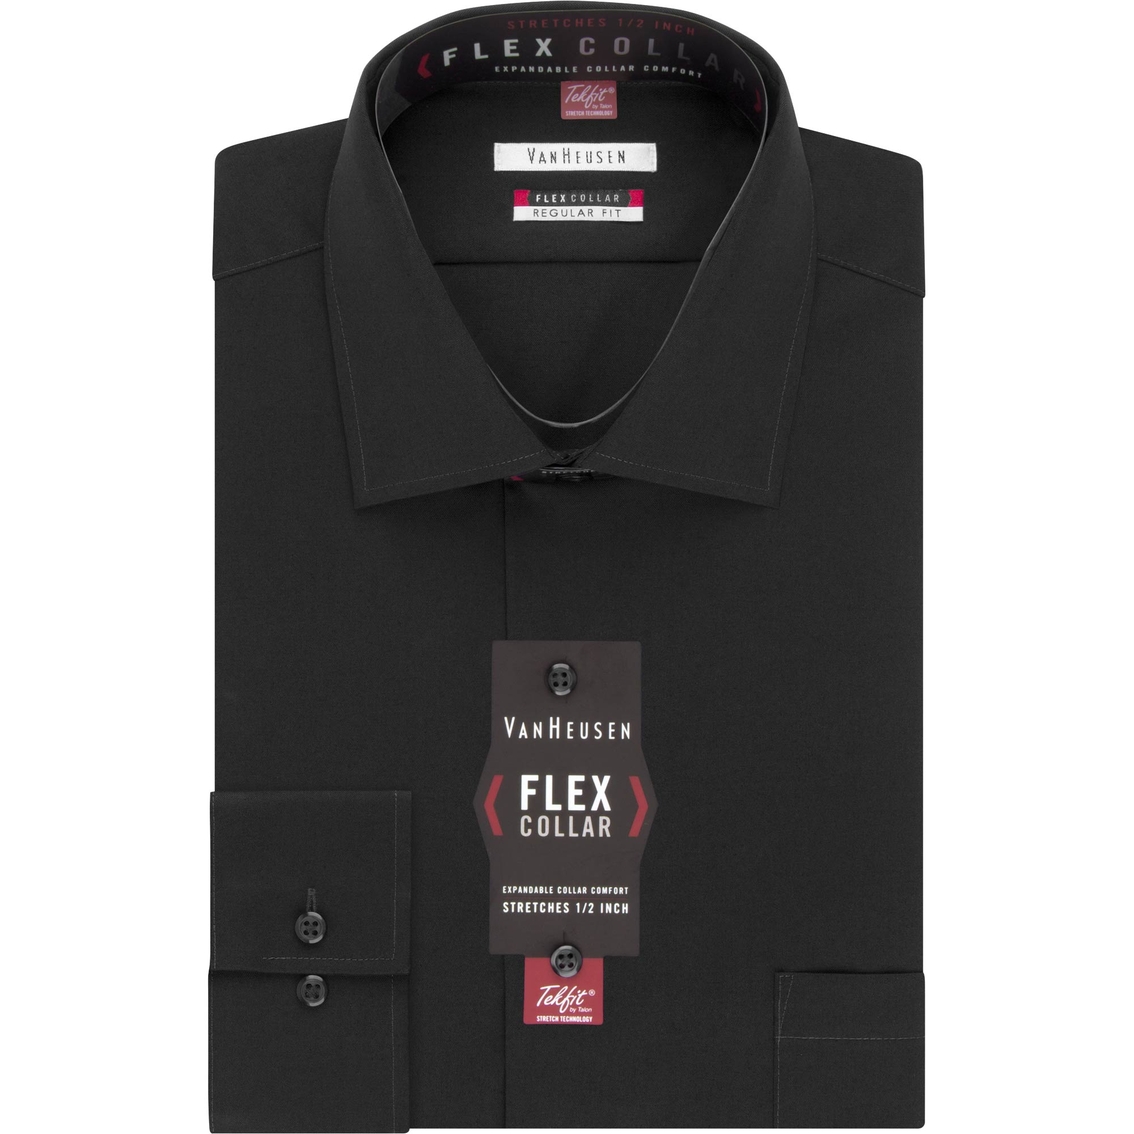 Van Heusen Flex Collar Big Fit Dress Shirt - Image 2 of 2